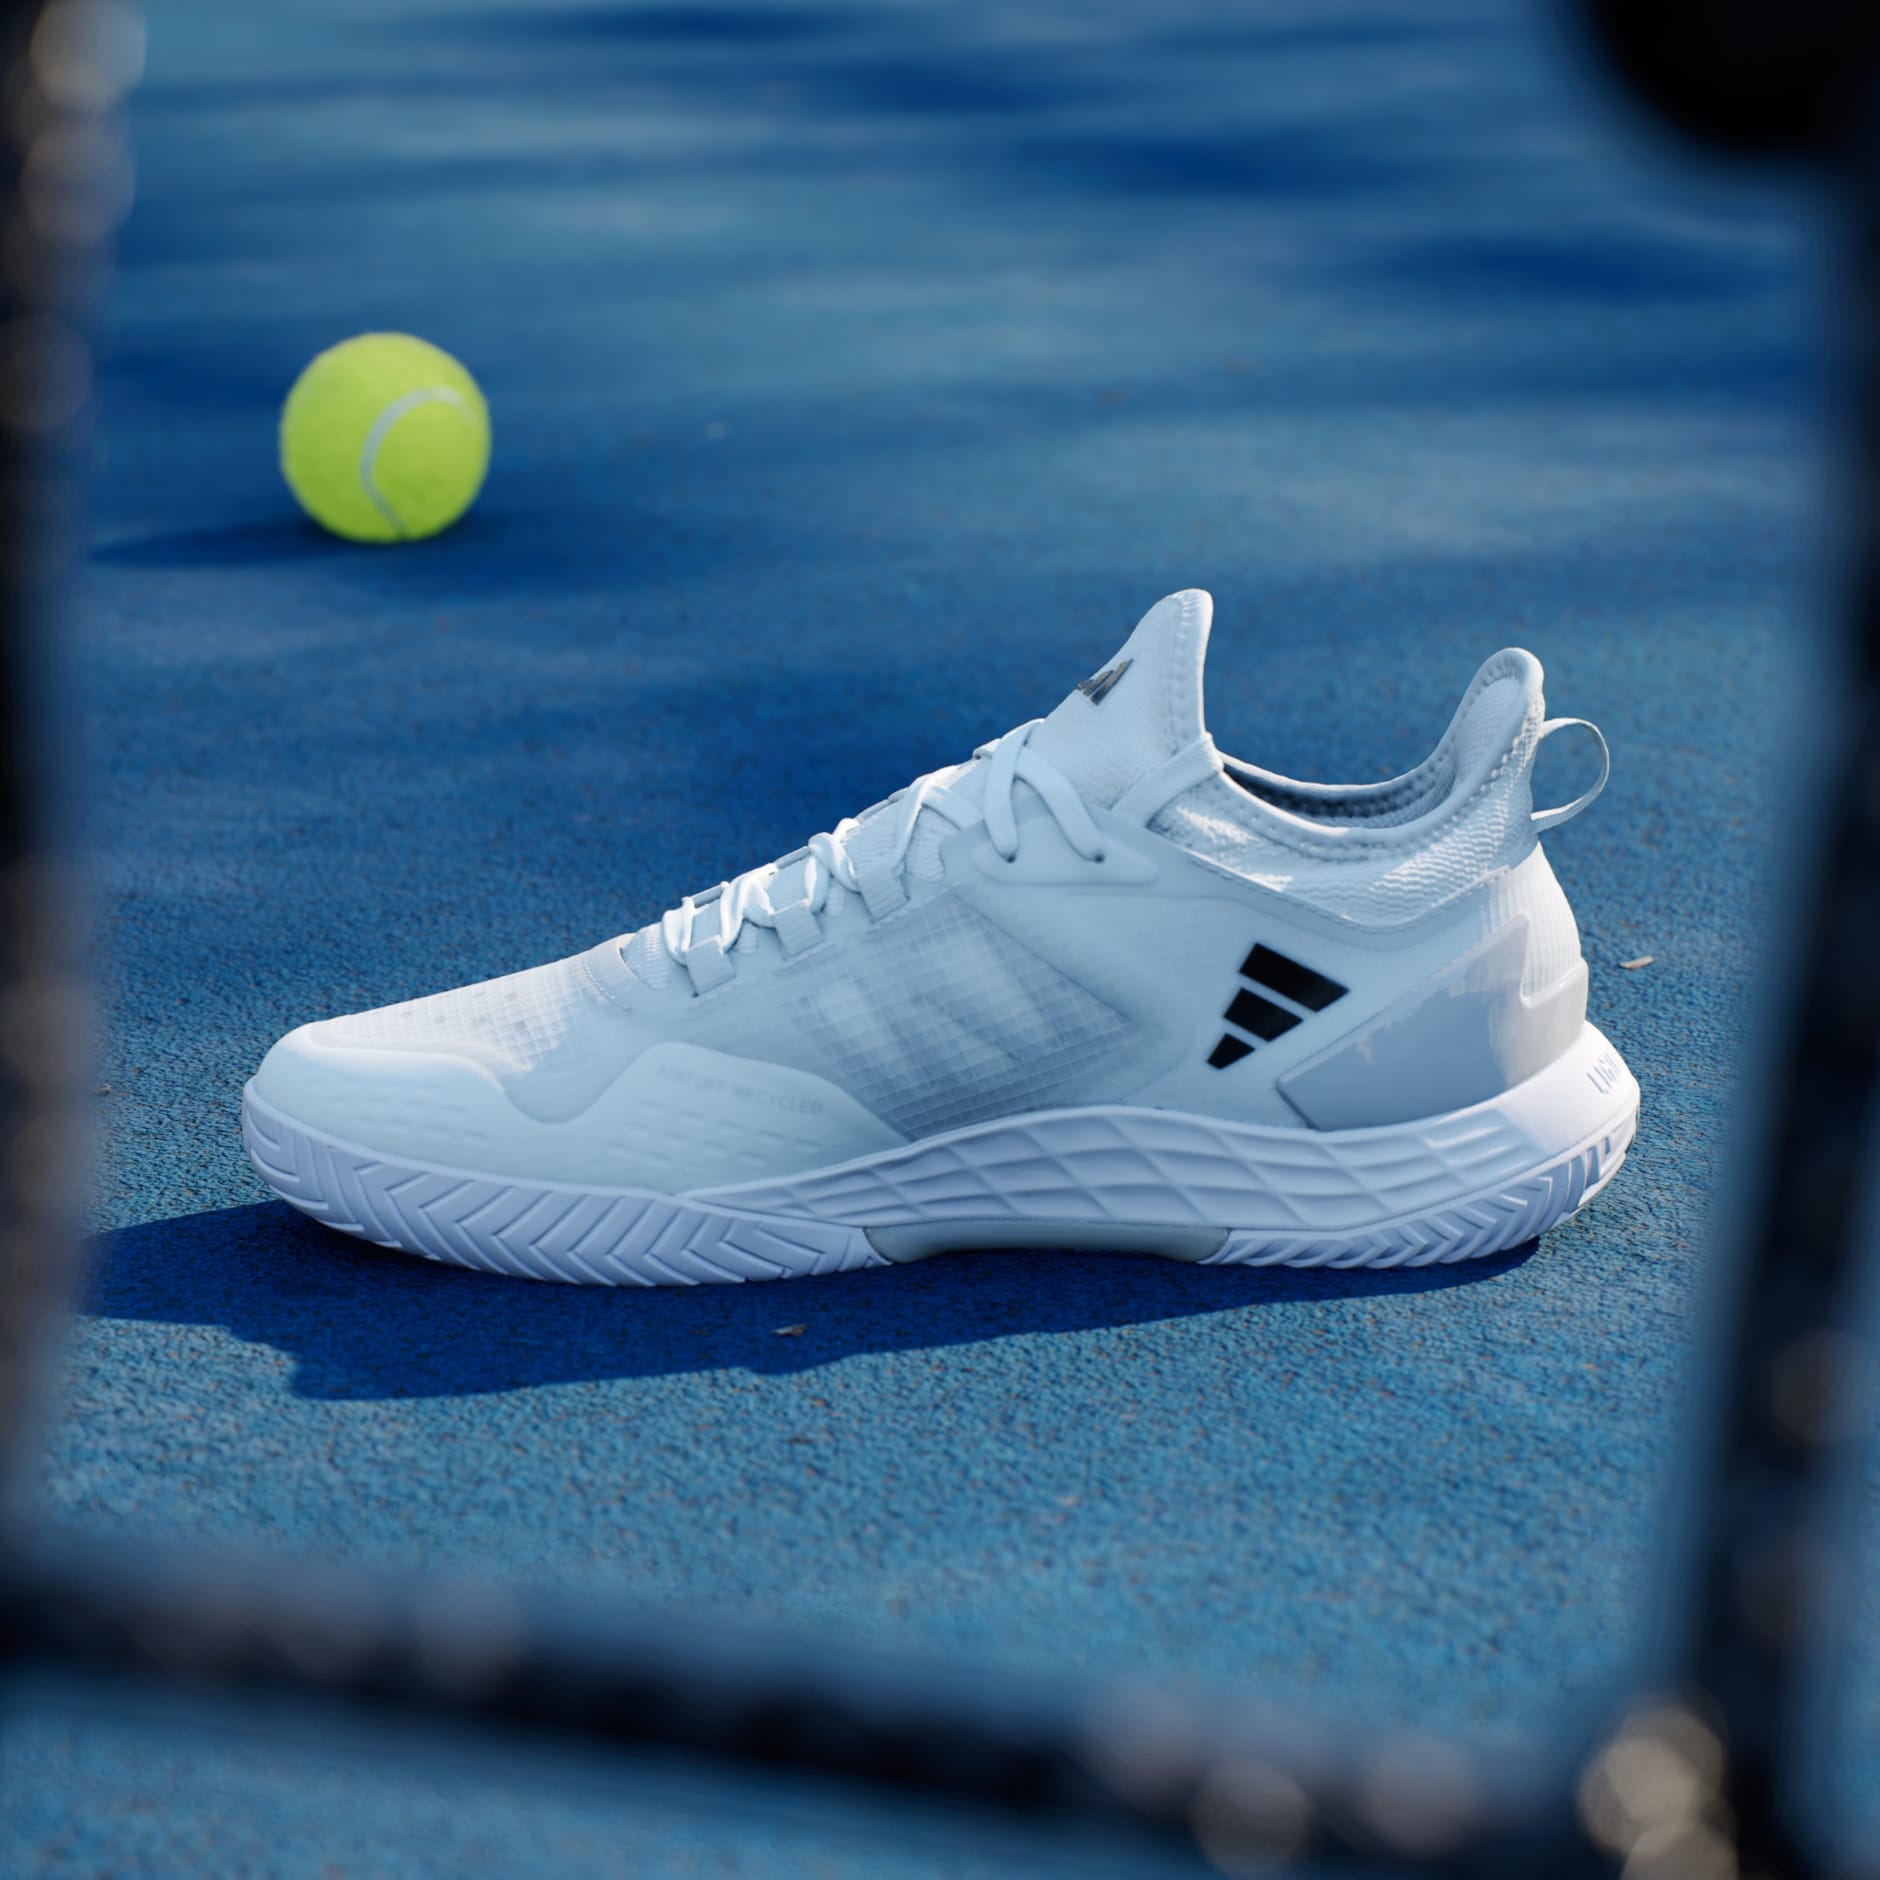 adidas Adizero Ubersonic 4.1 Tennis Shoes - White, Men's Tennis